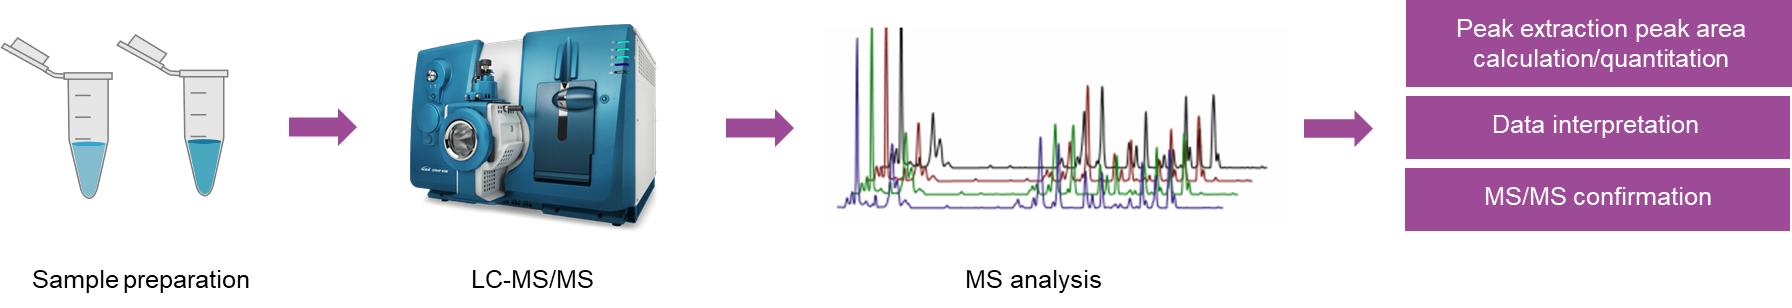 Workflow for Amino Acid Metabolism Analysis